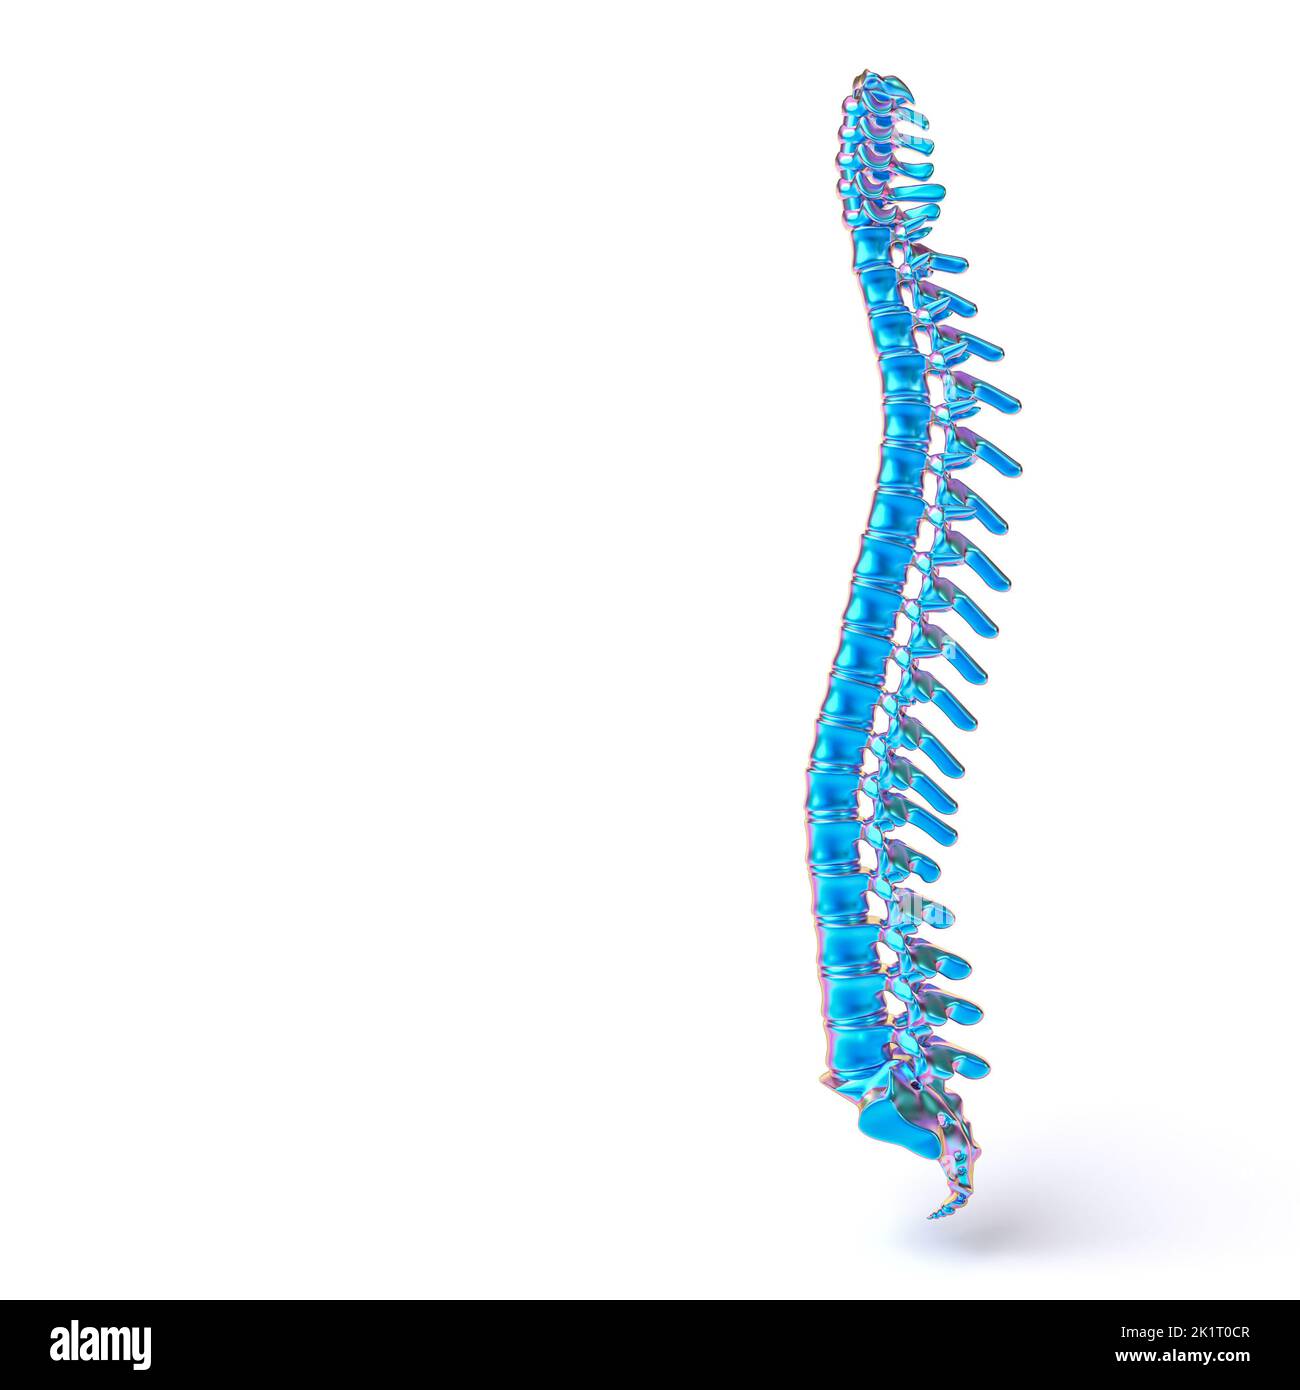 metallic iridescent human body spine on white background. 3d render Stock Photo